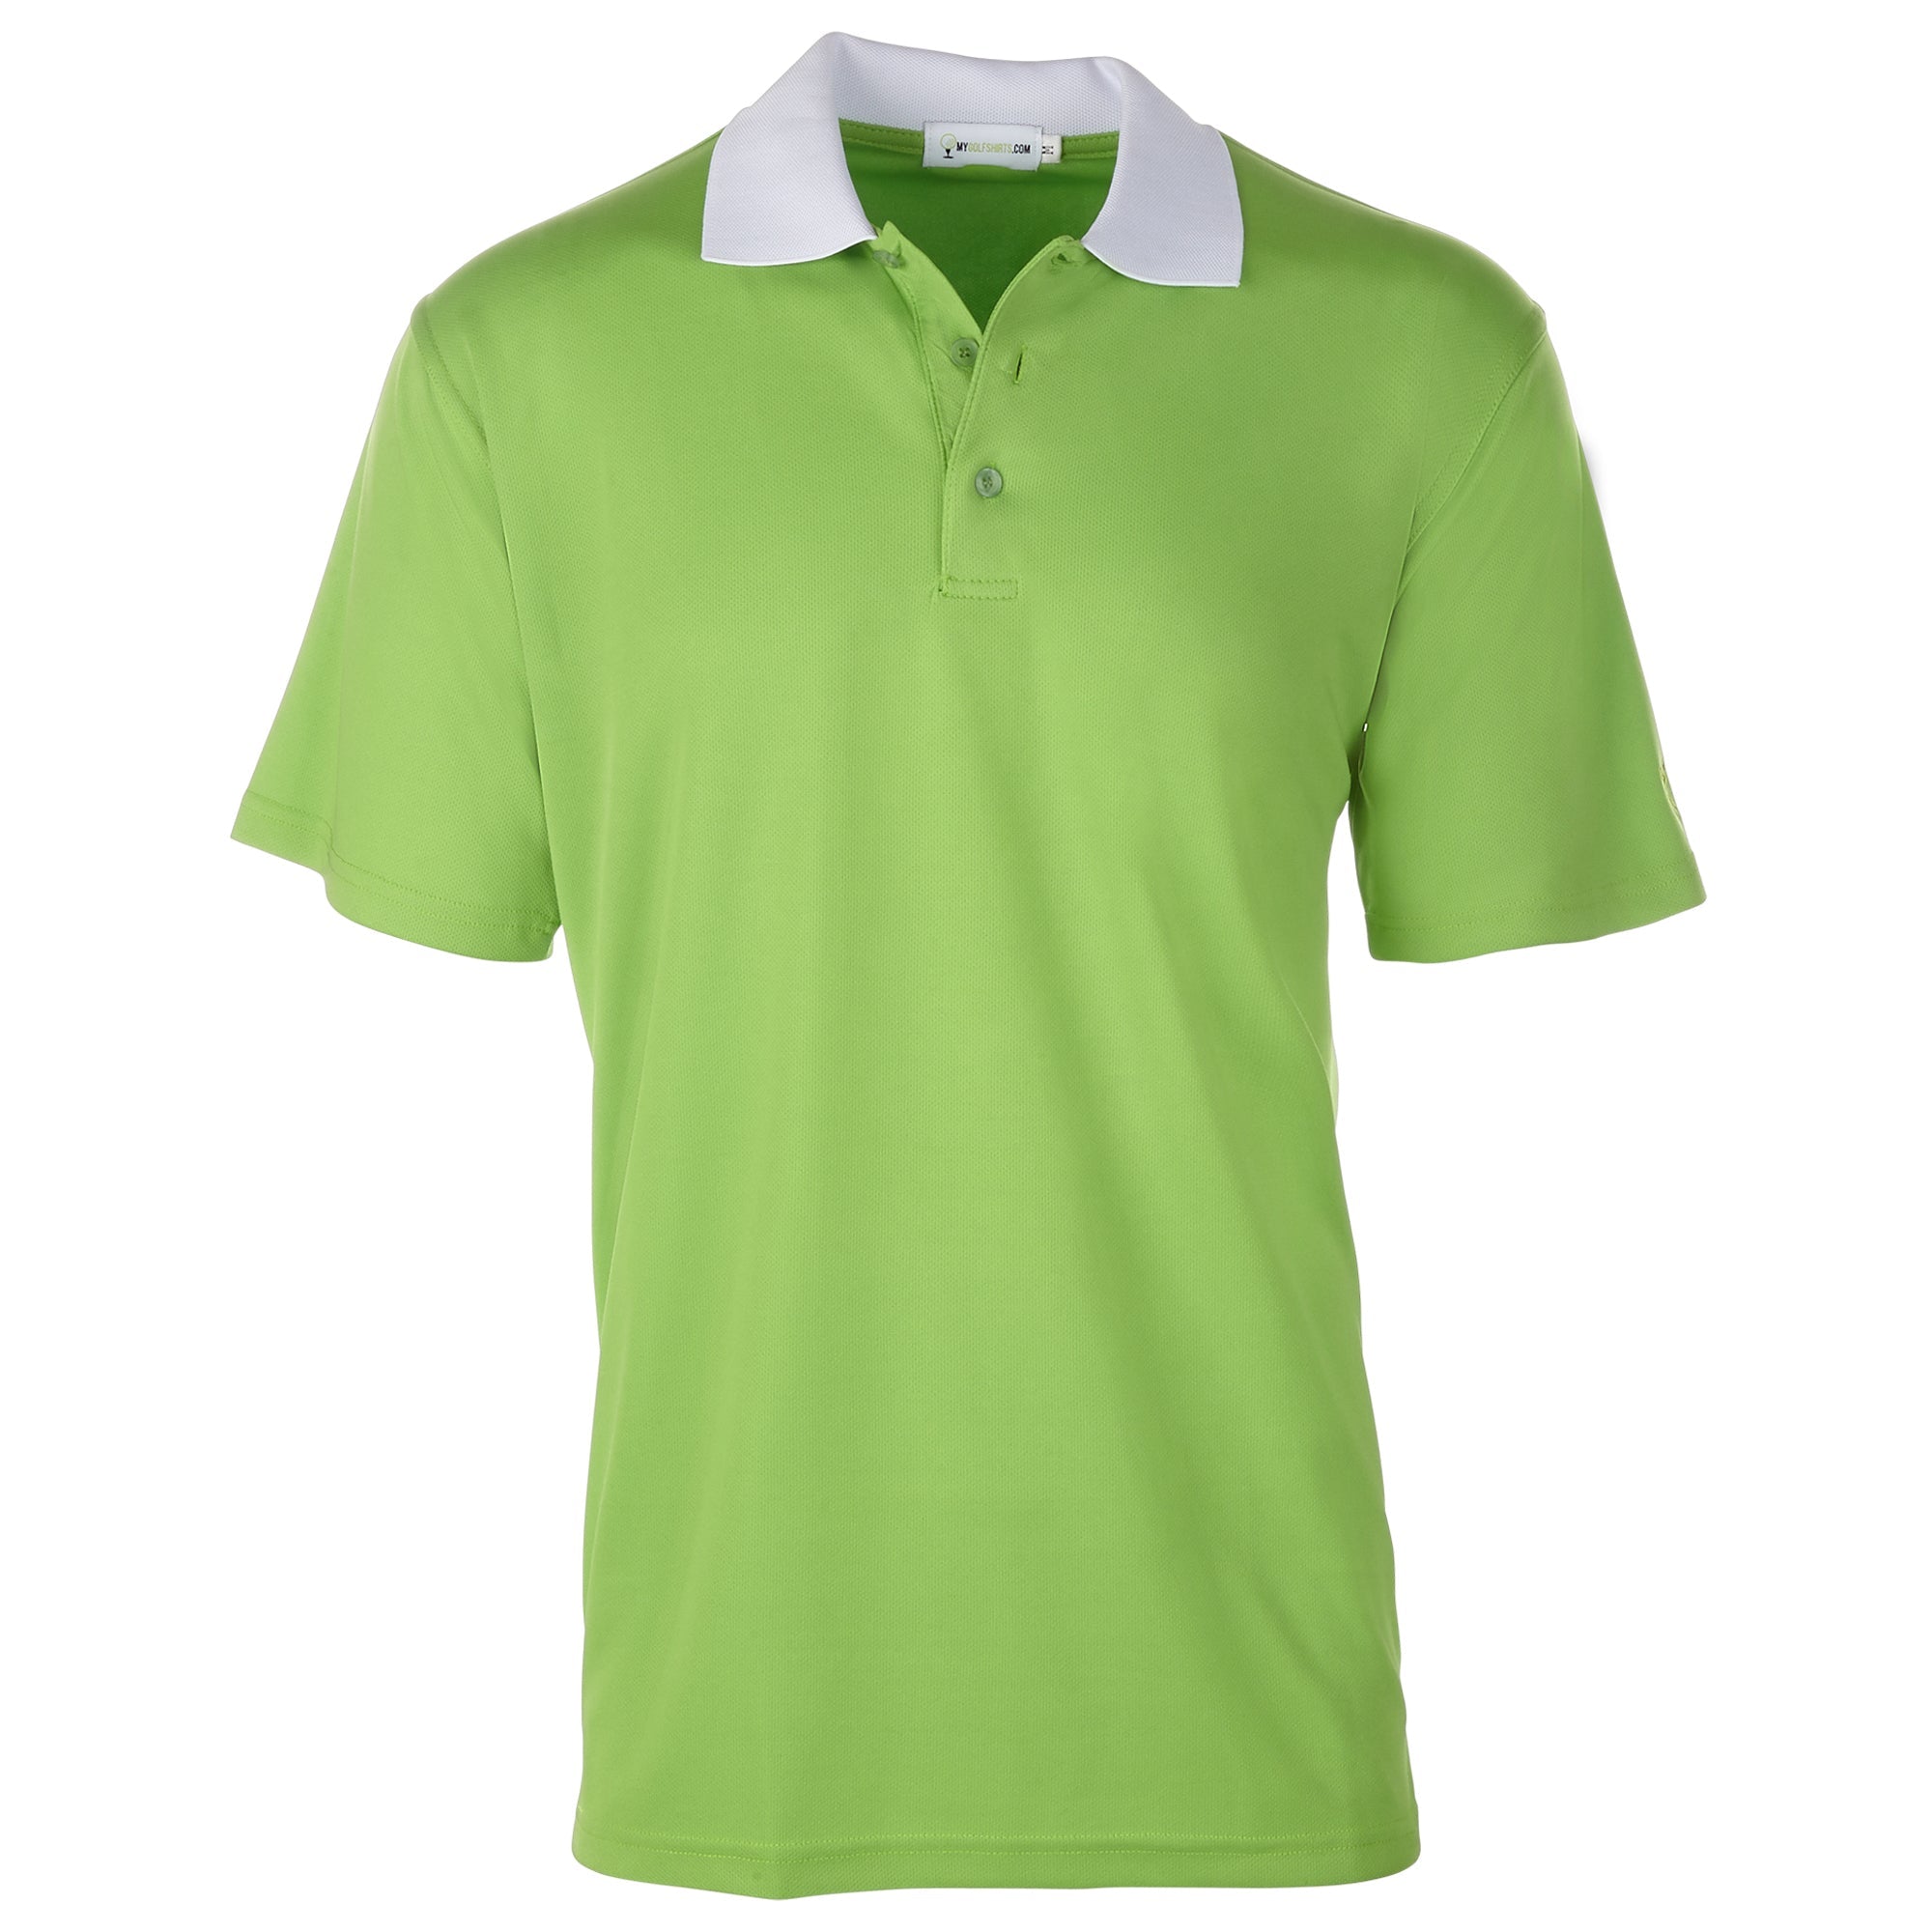 Dri-FIT Golf Shirts - Men's Bold  Contrast Collared - Standard Fit  6501 - My Golf Shirts